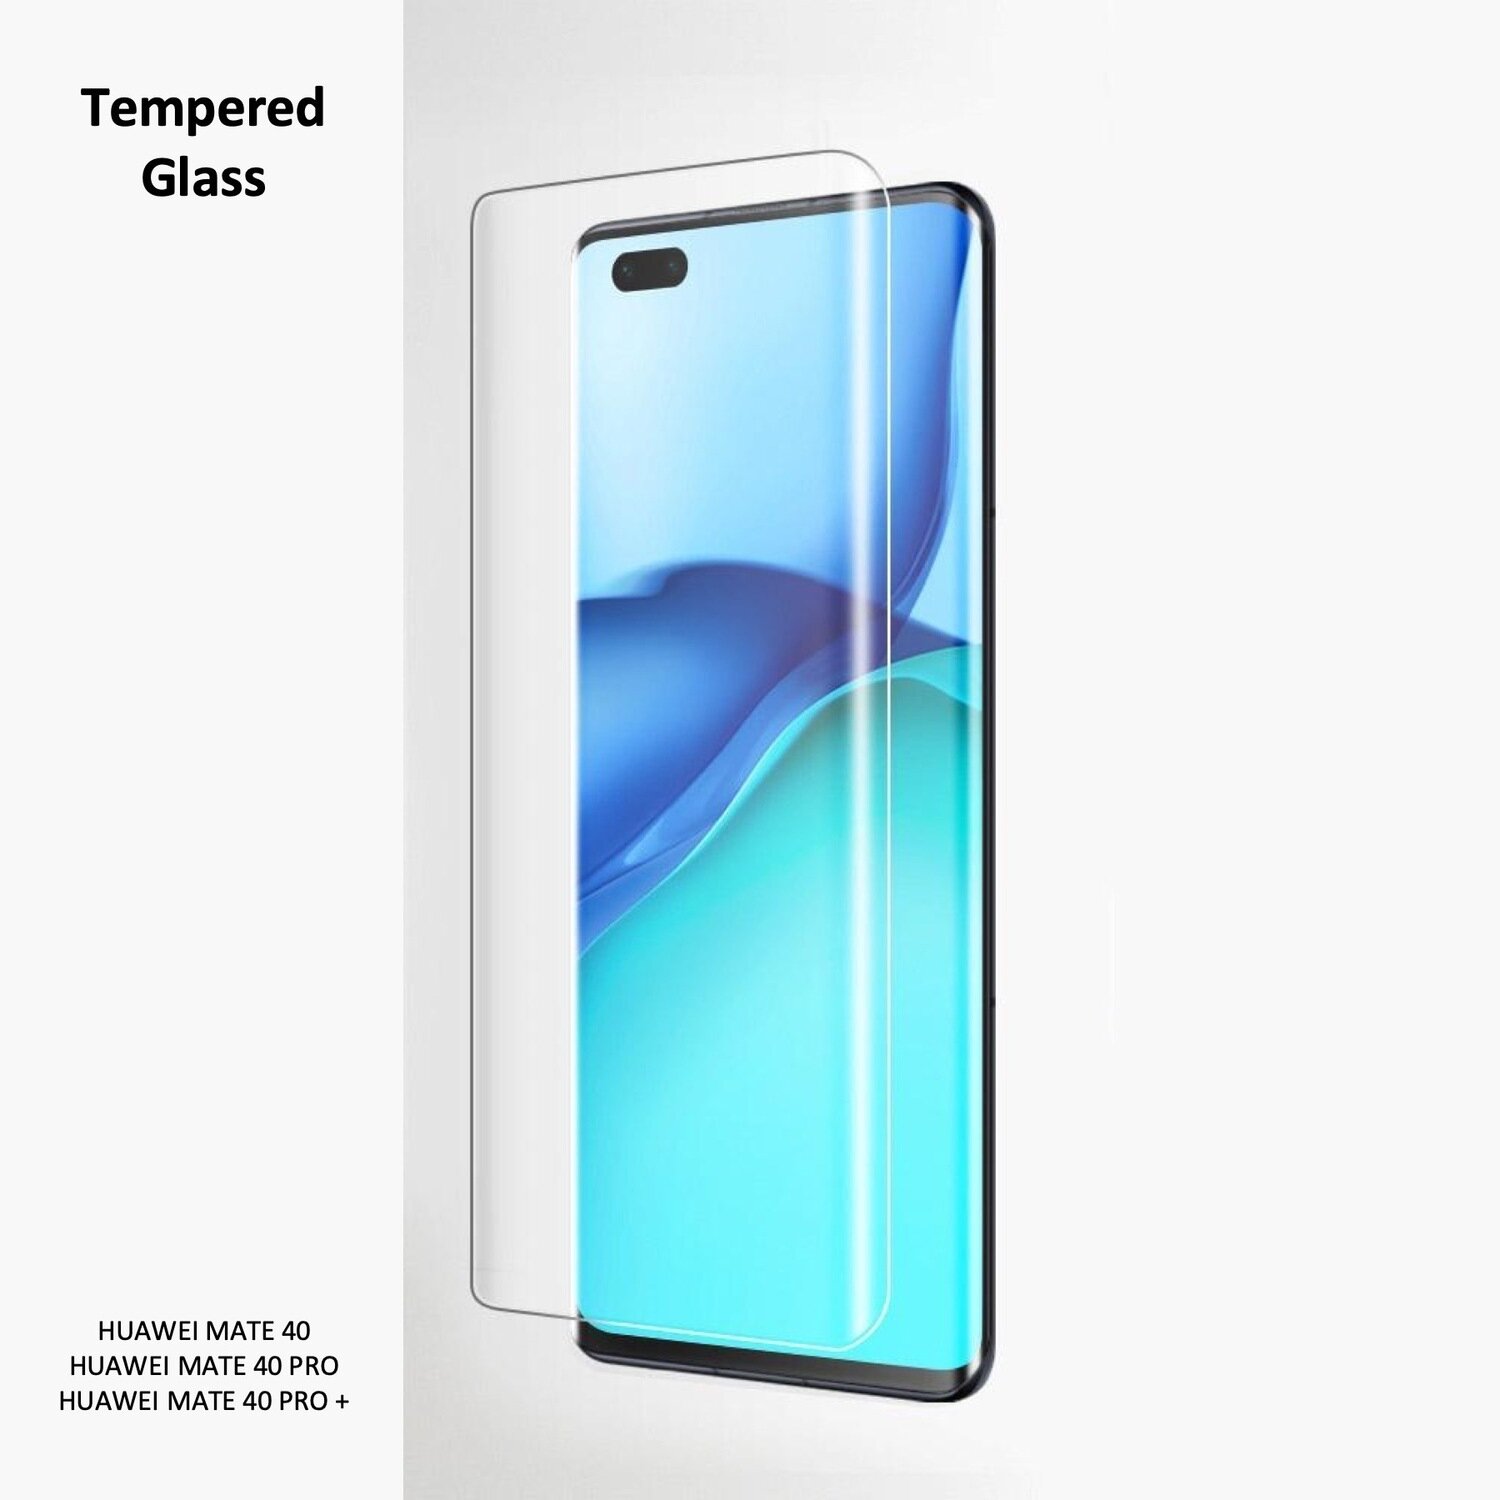 Komass Huawei Mate 40 Tempered Glass, 3D UV Clear (Screen Protector)